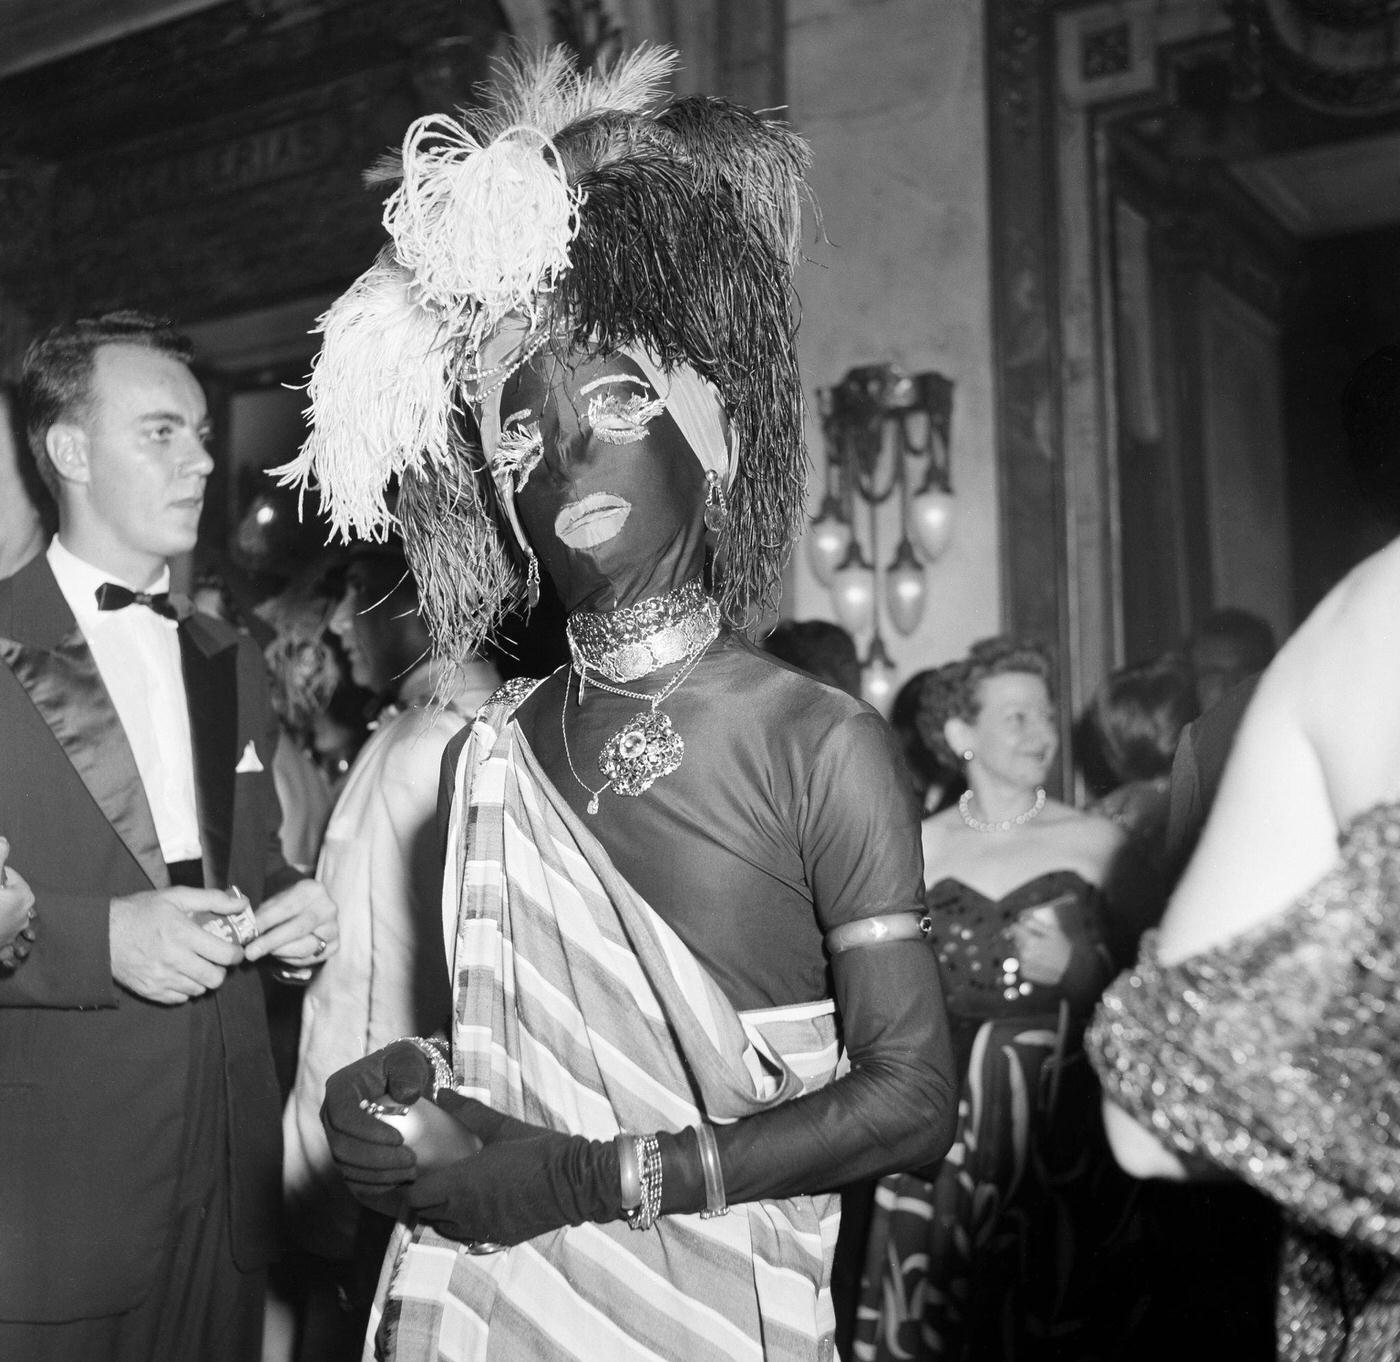 Man in costume enjoys Rio de Janeiro's Carnival festivities. 1953